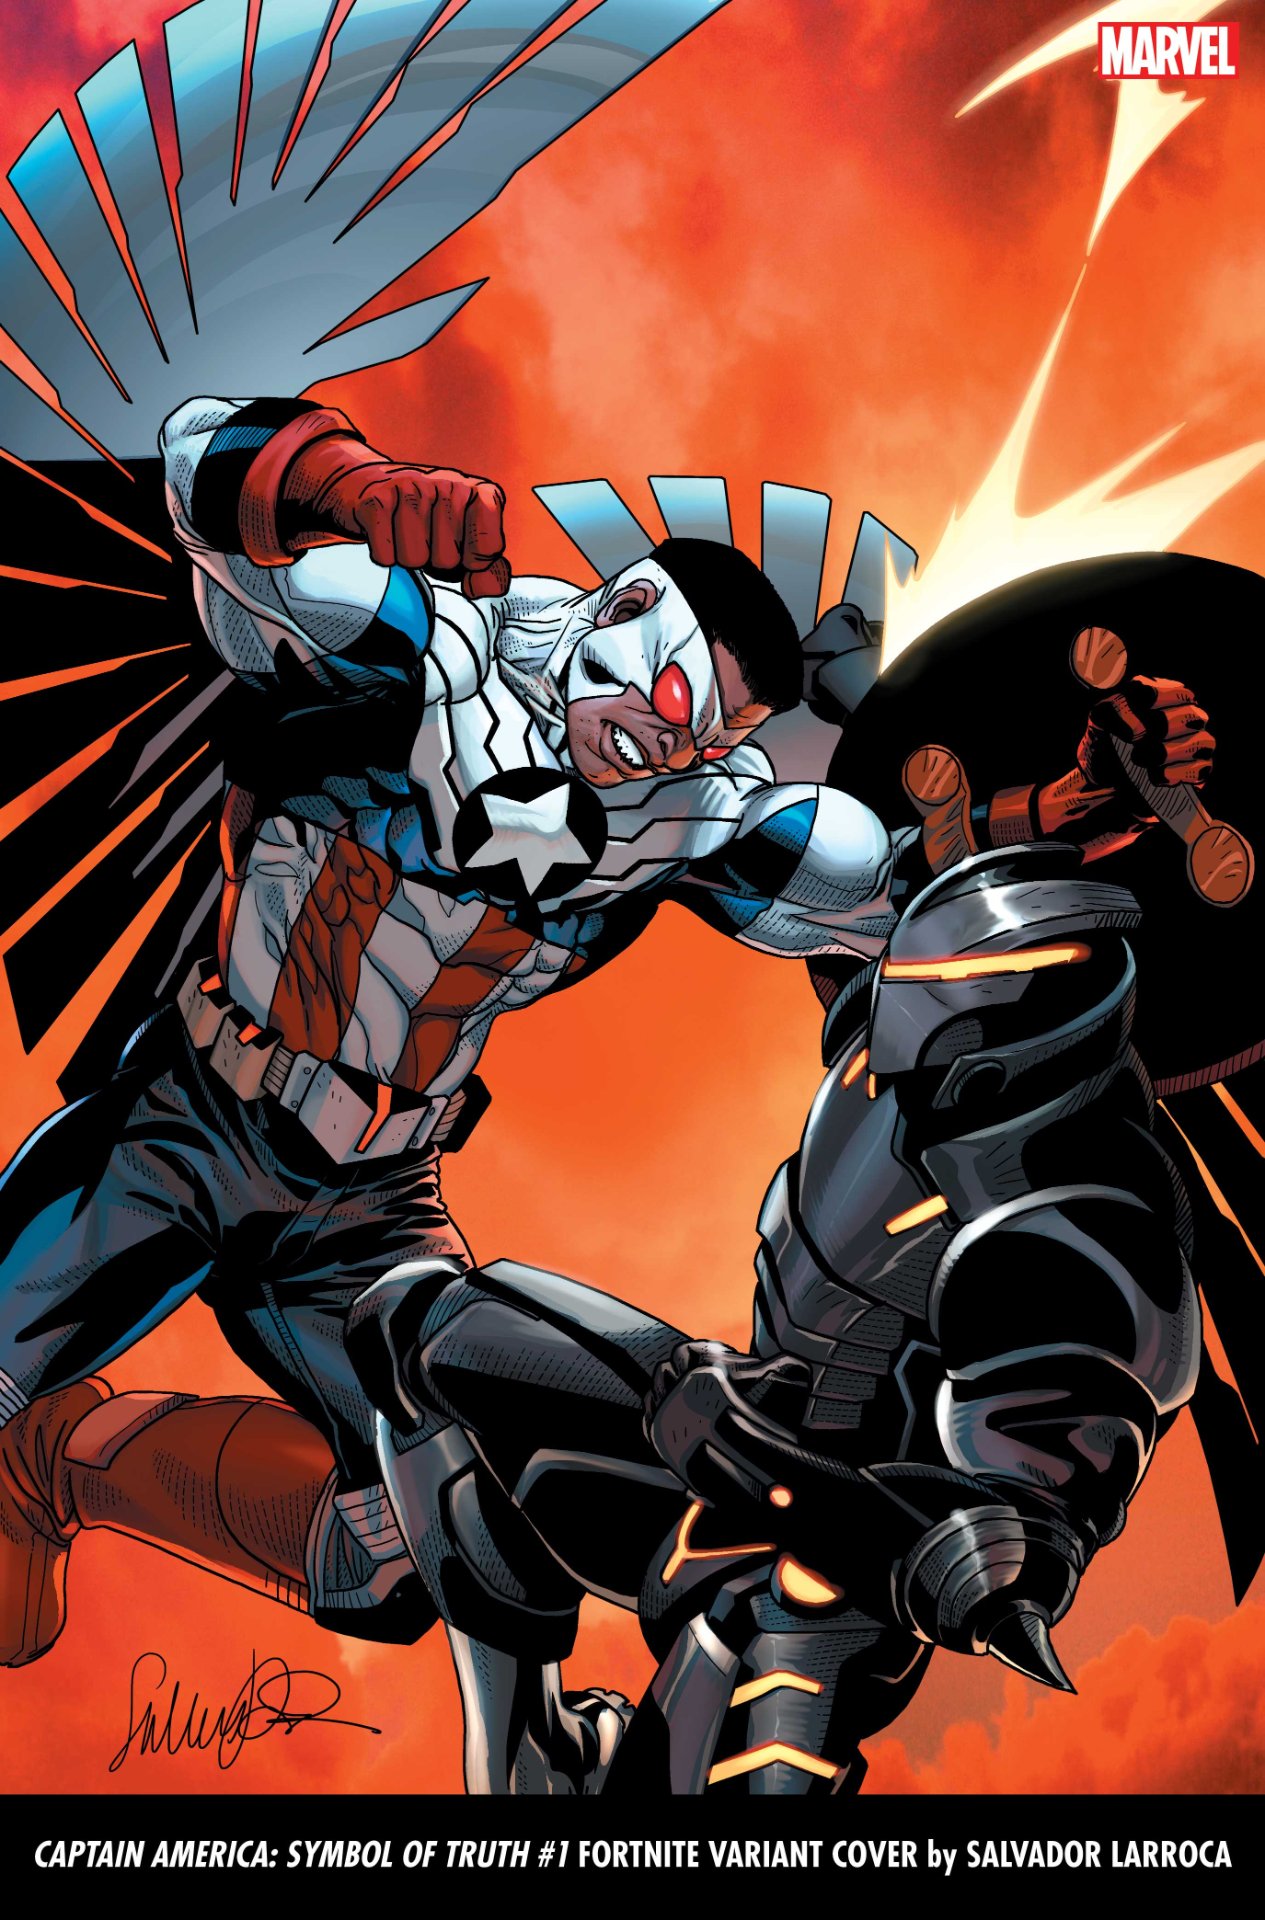 Fortnite X Marvel Zero War #1 covers